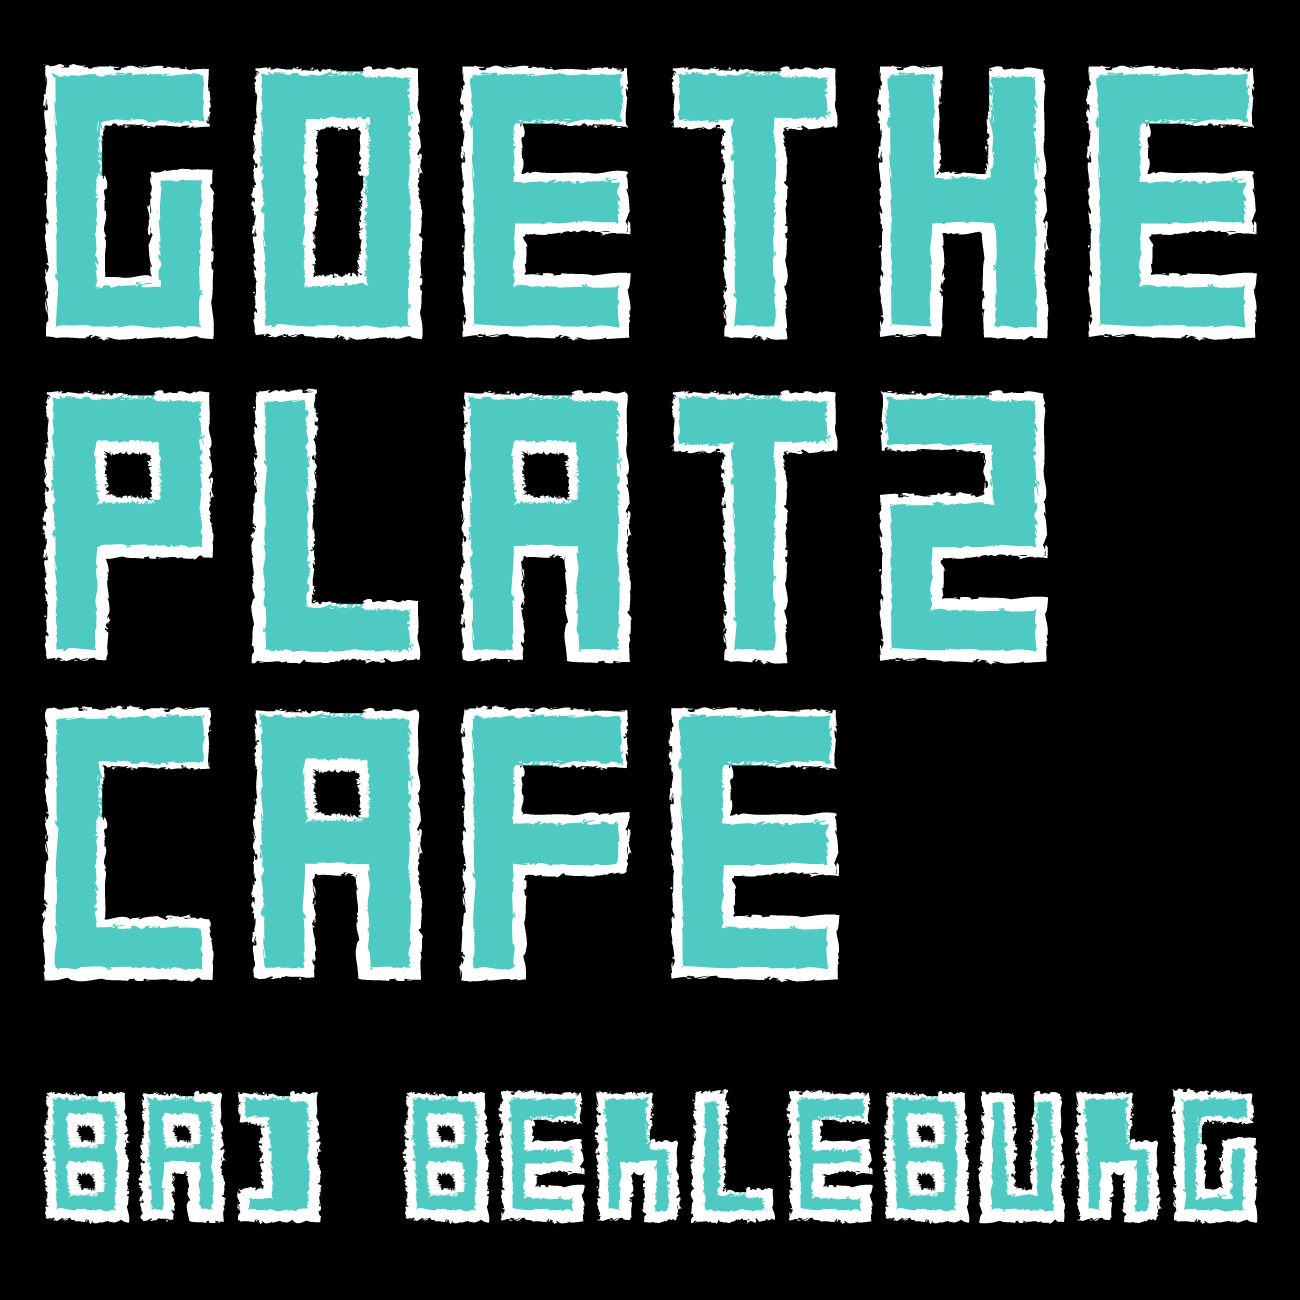 Post Manufabo Locations goetheplatz cafe bad berleburg